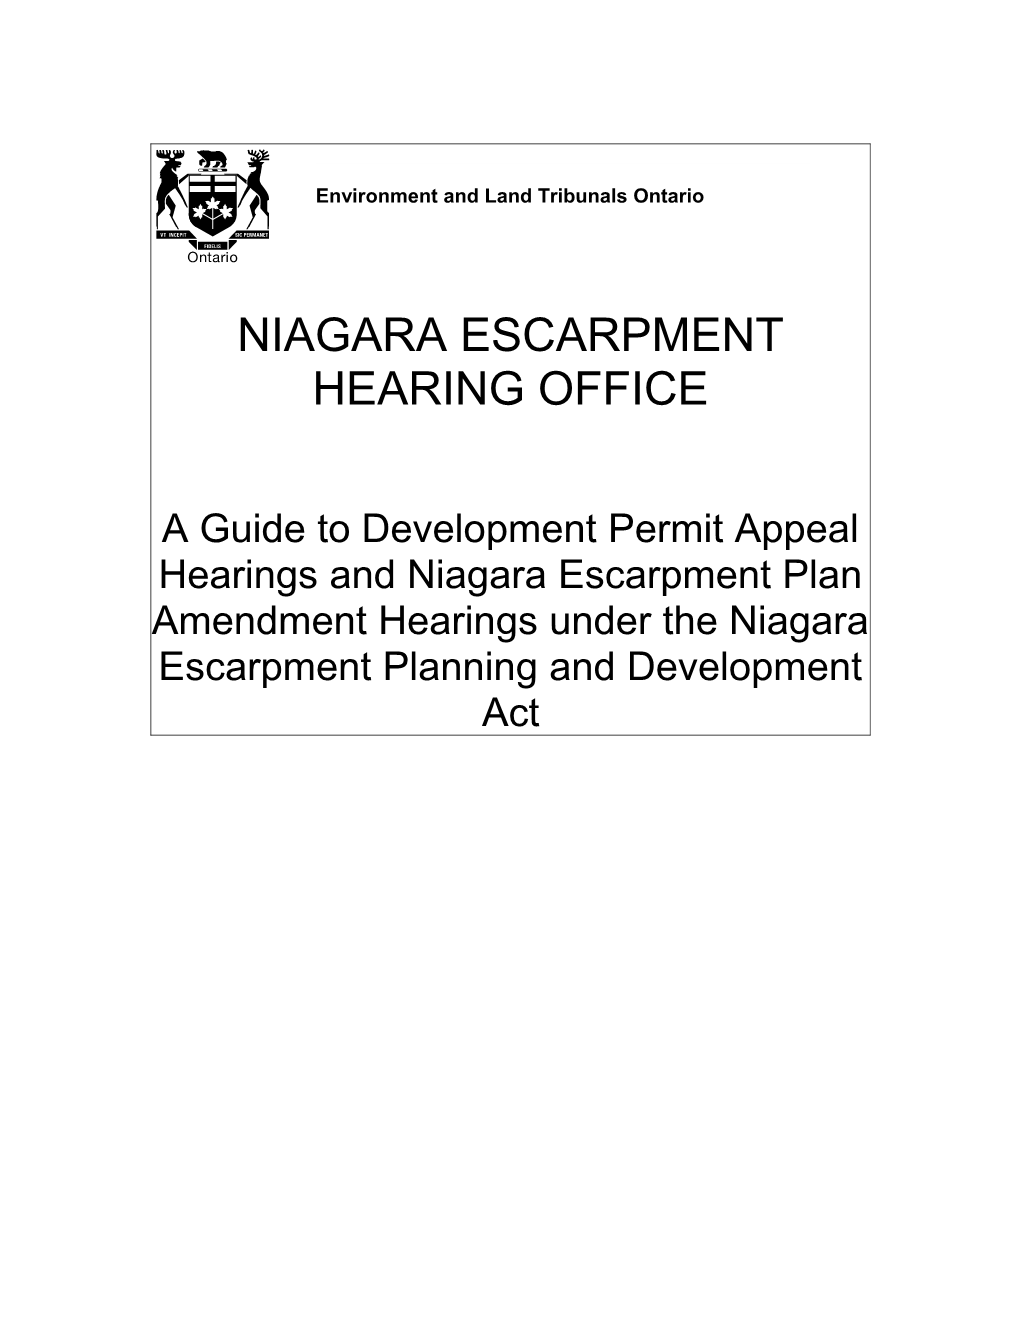 Niagara Escarpment Hearing Office